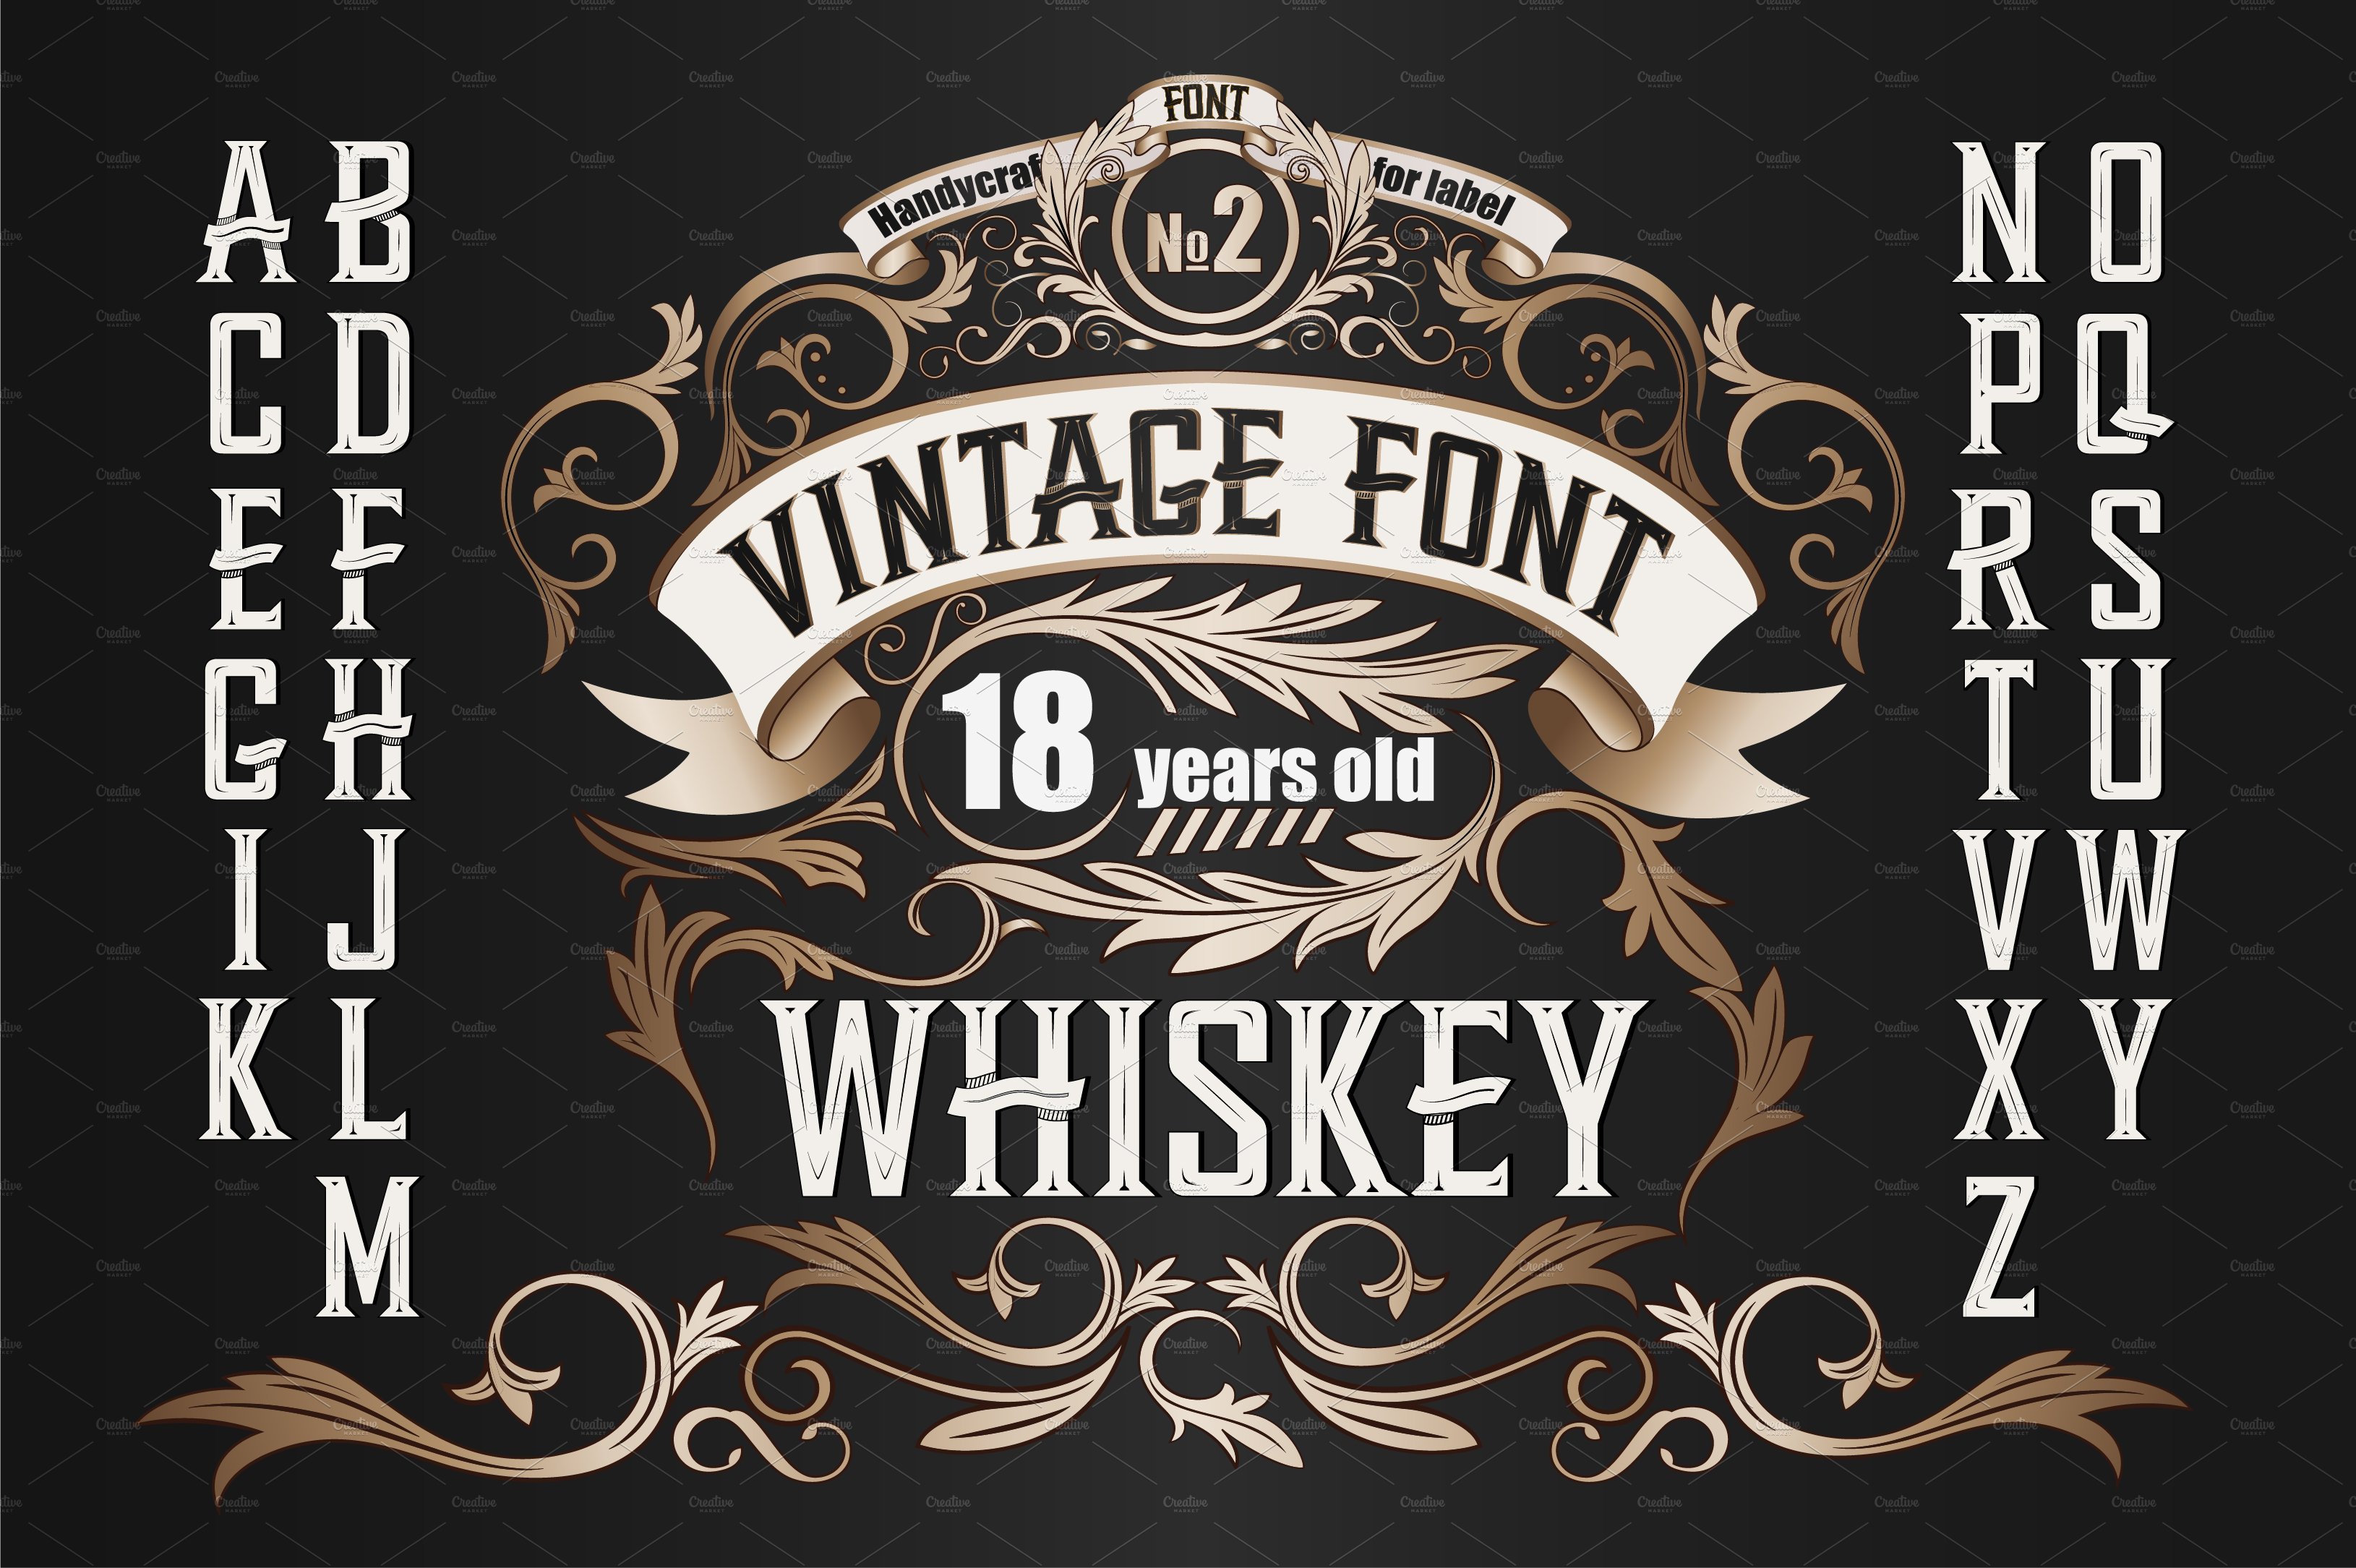 Whiskey OTF label font cover image.